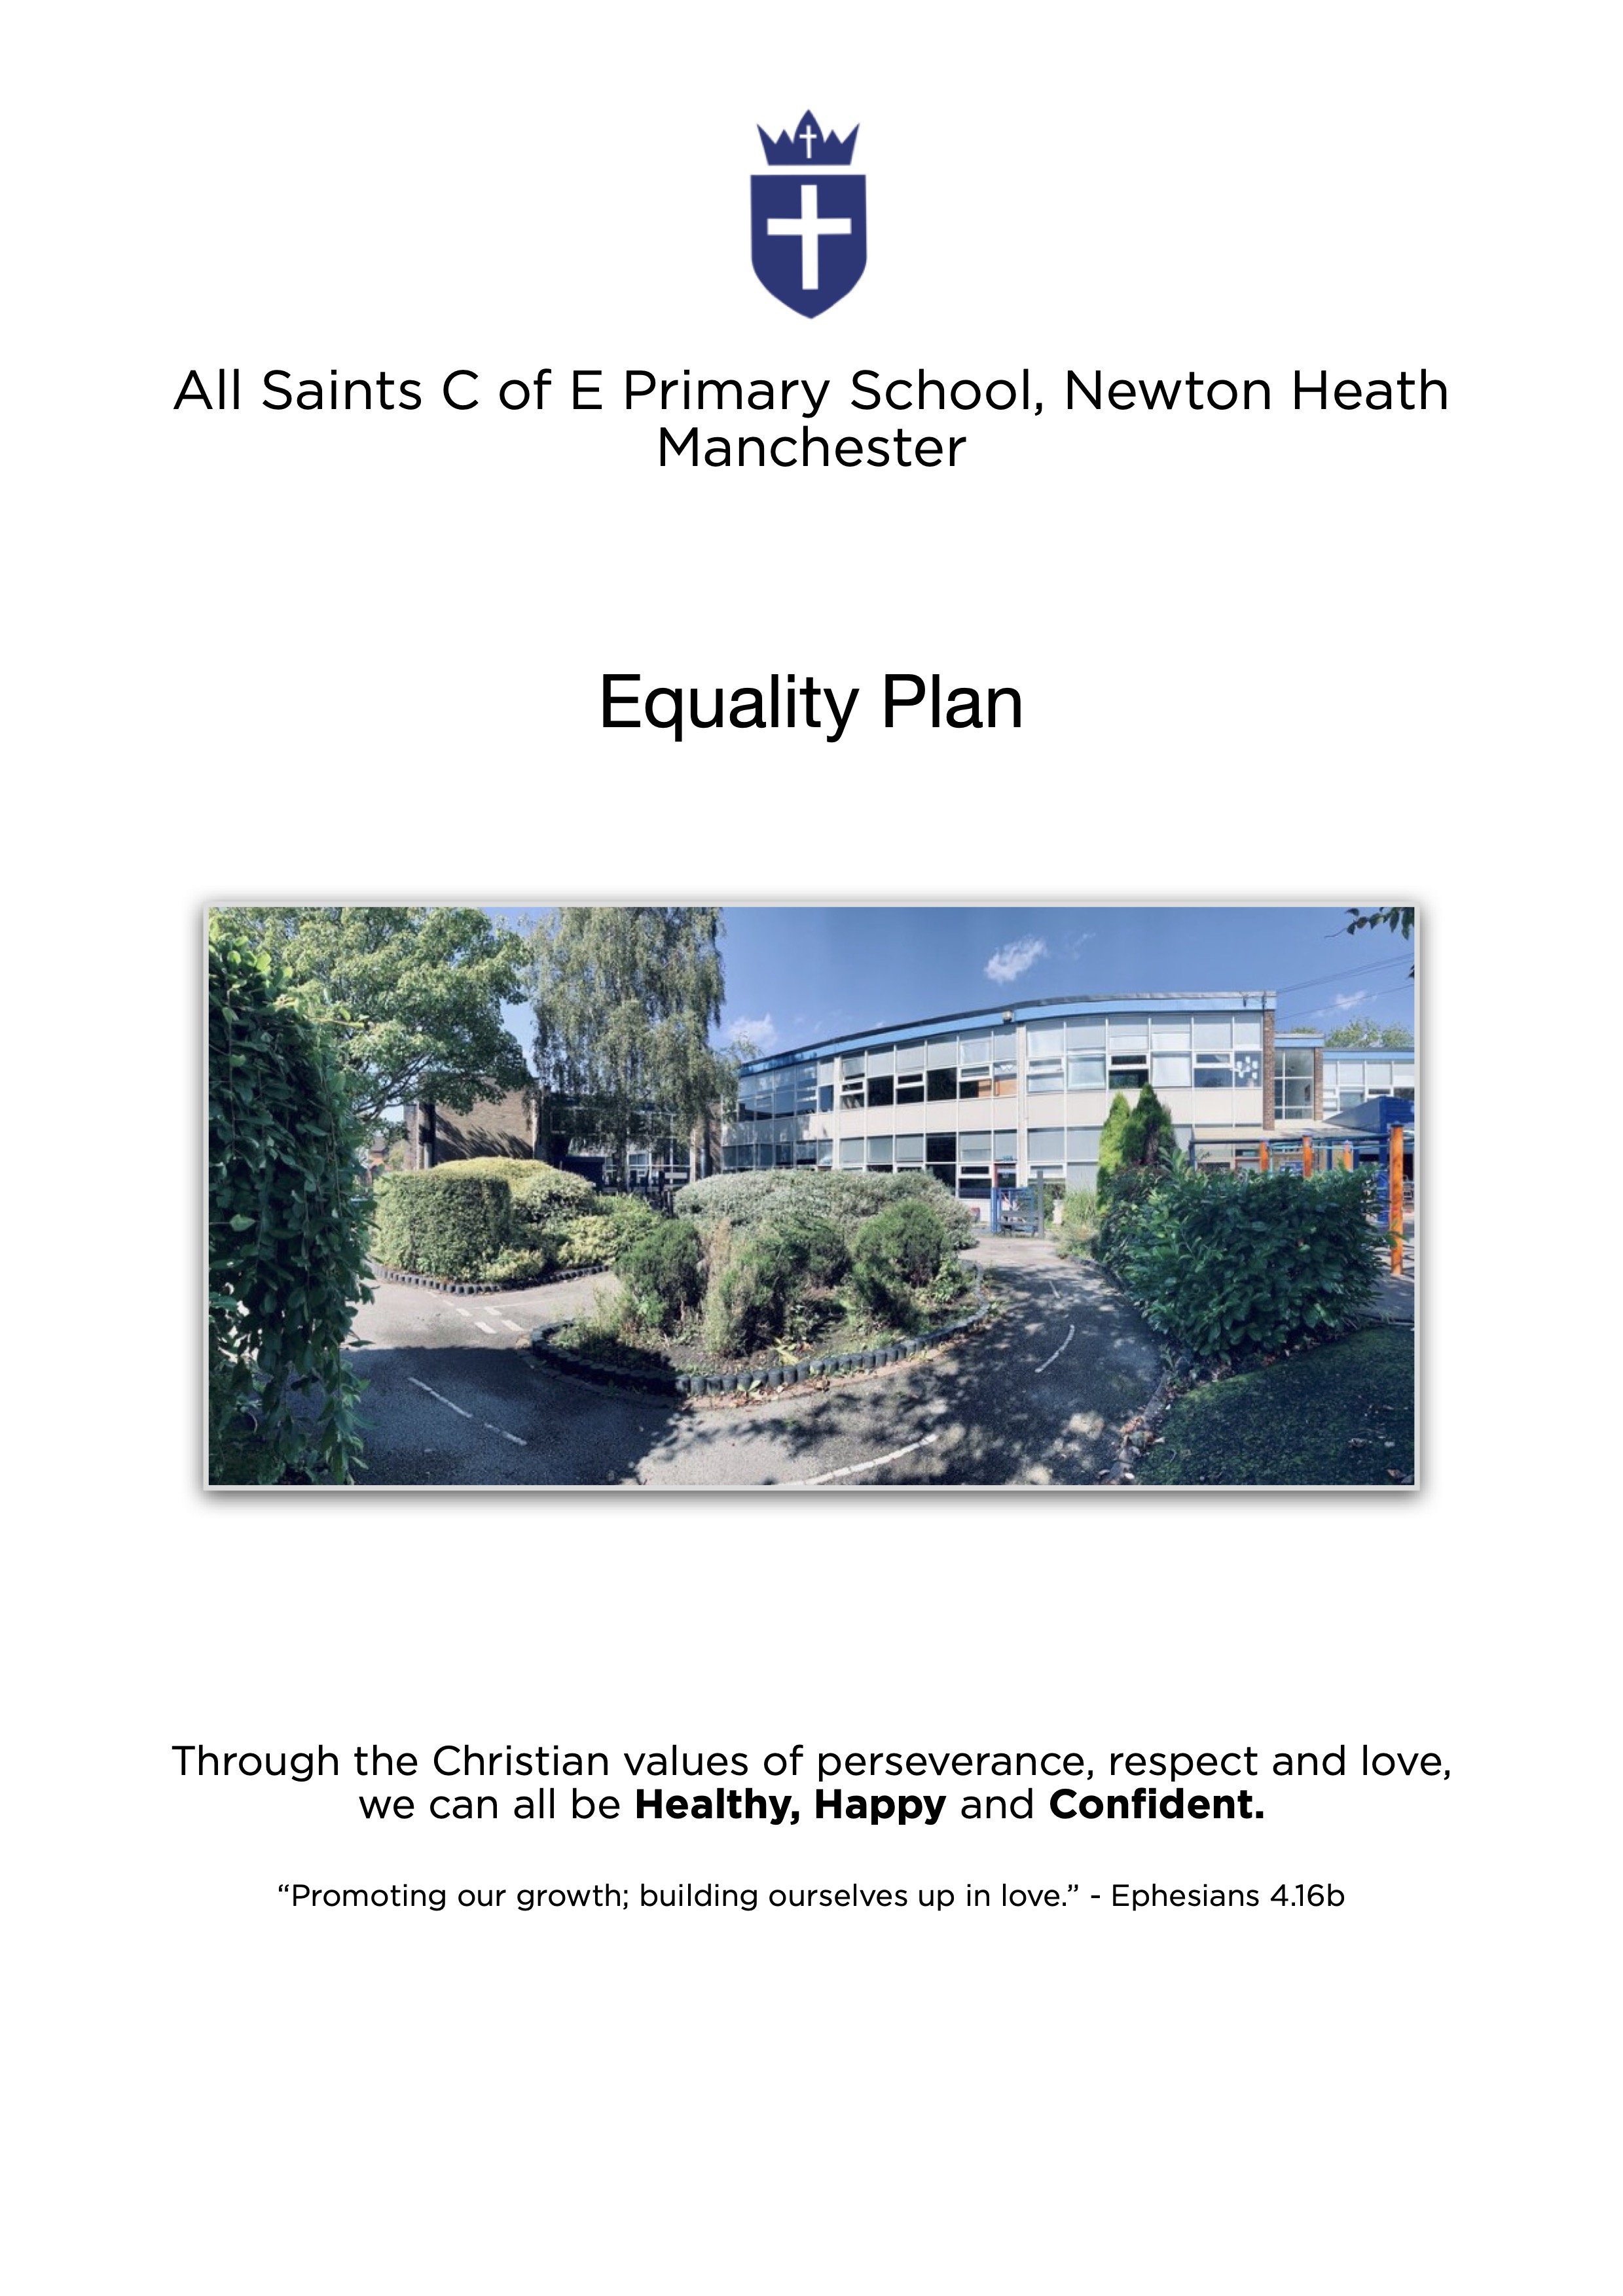 Equality Plan Cover.jpg